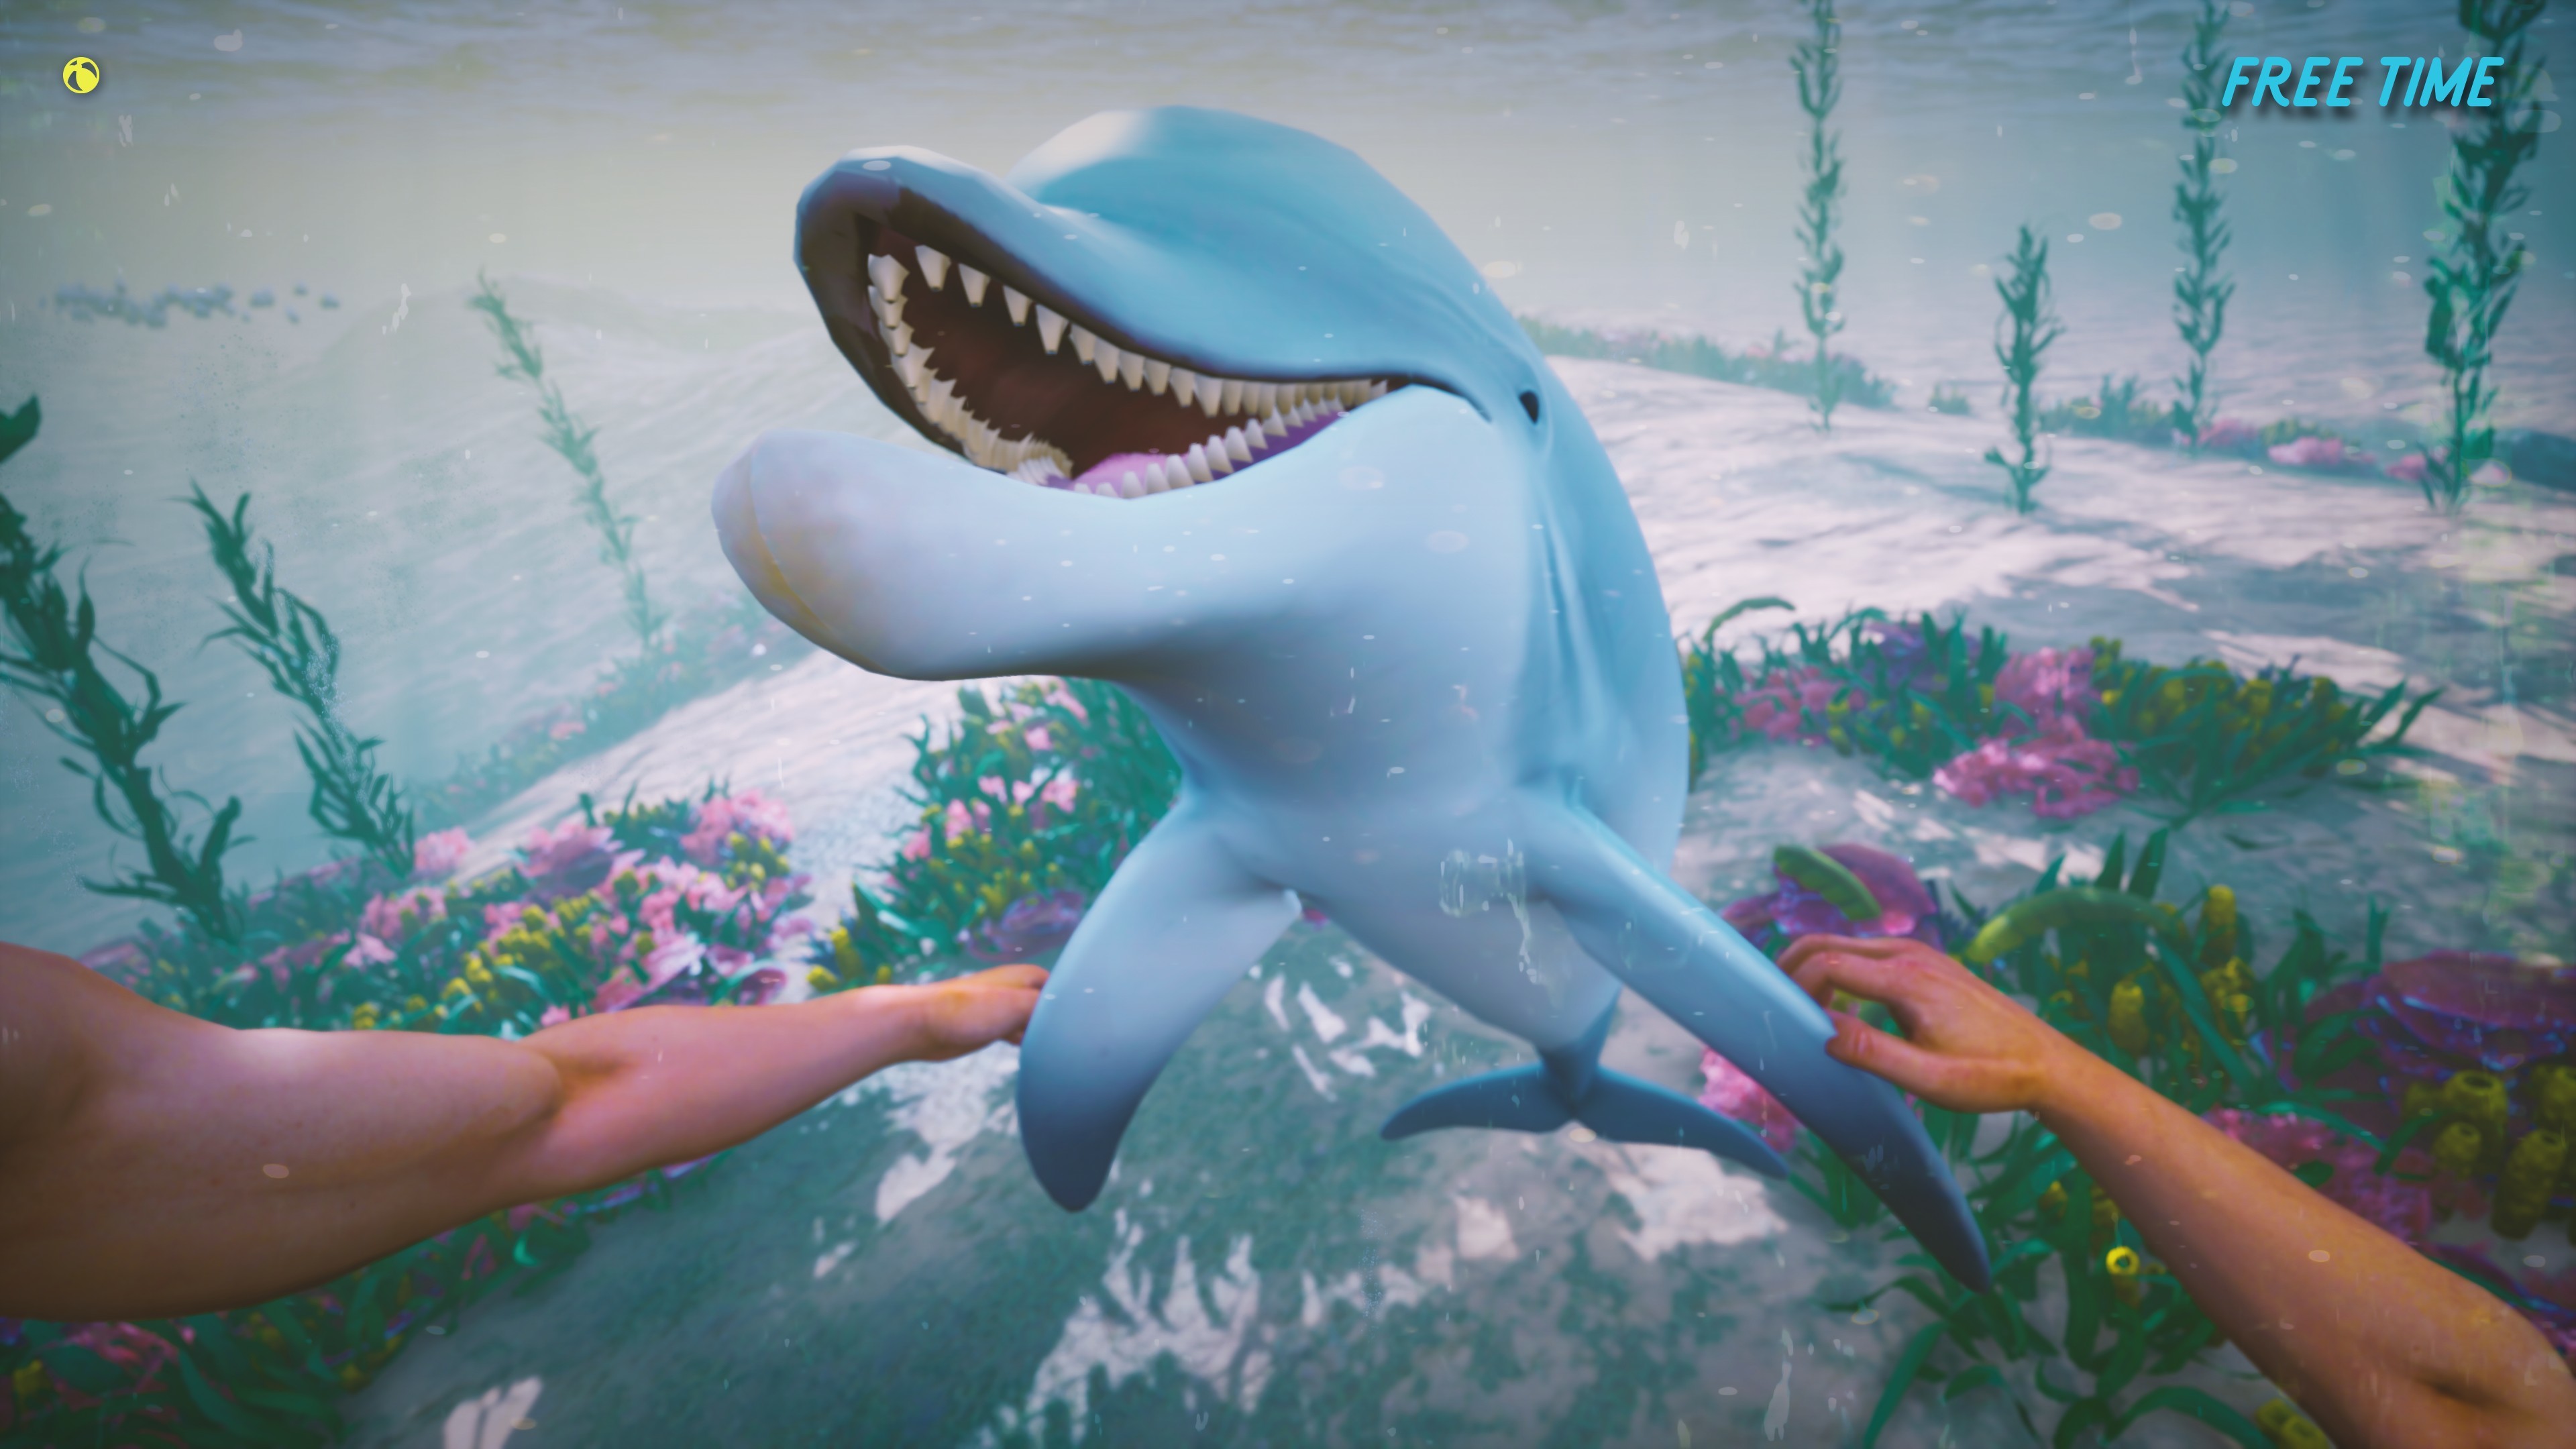 Dolphin Trainer VR screenshot